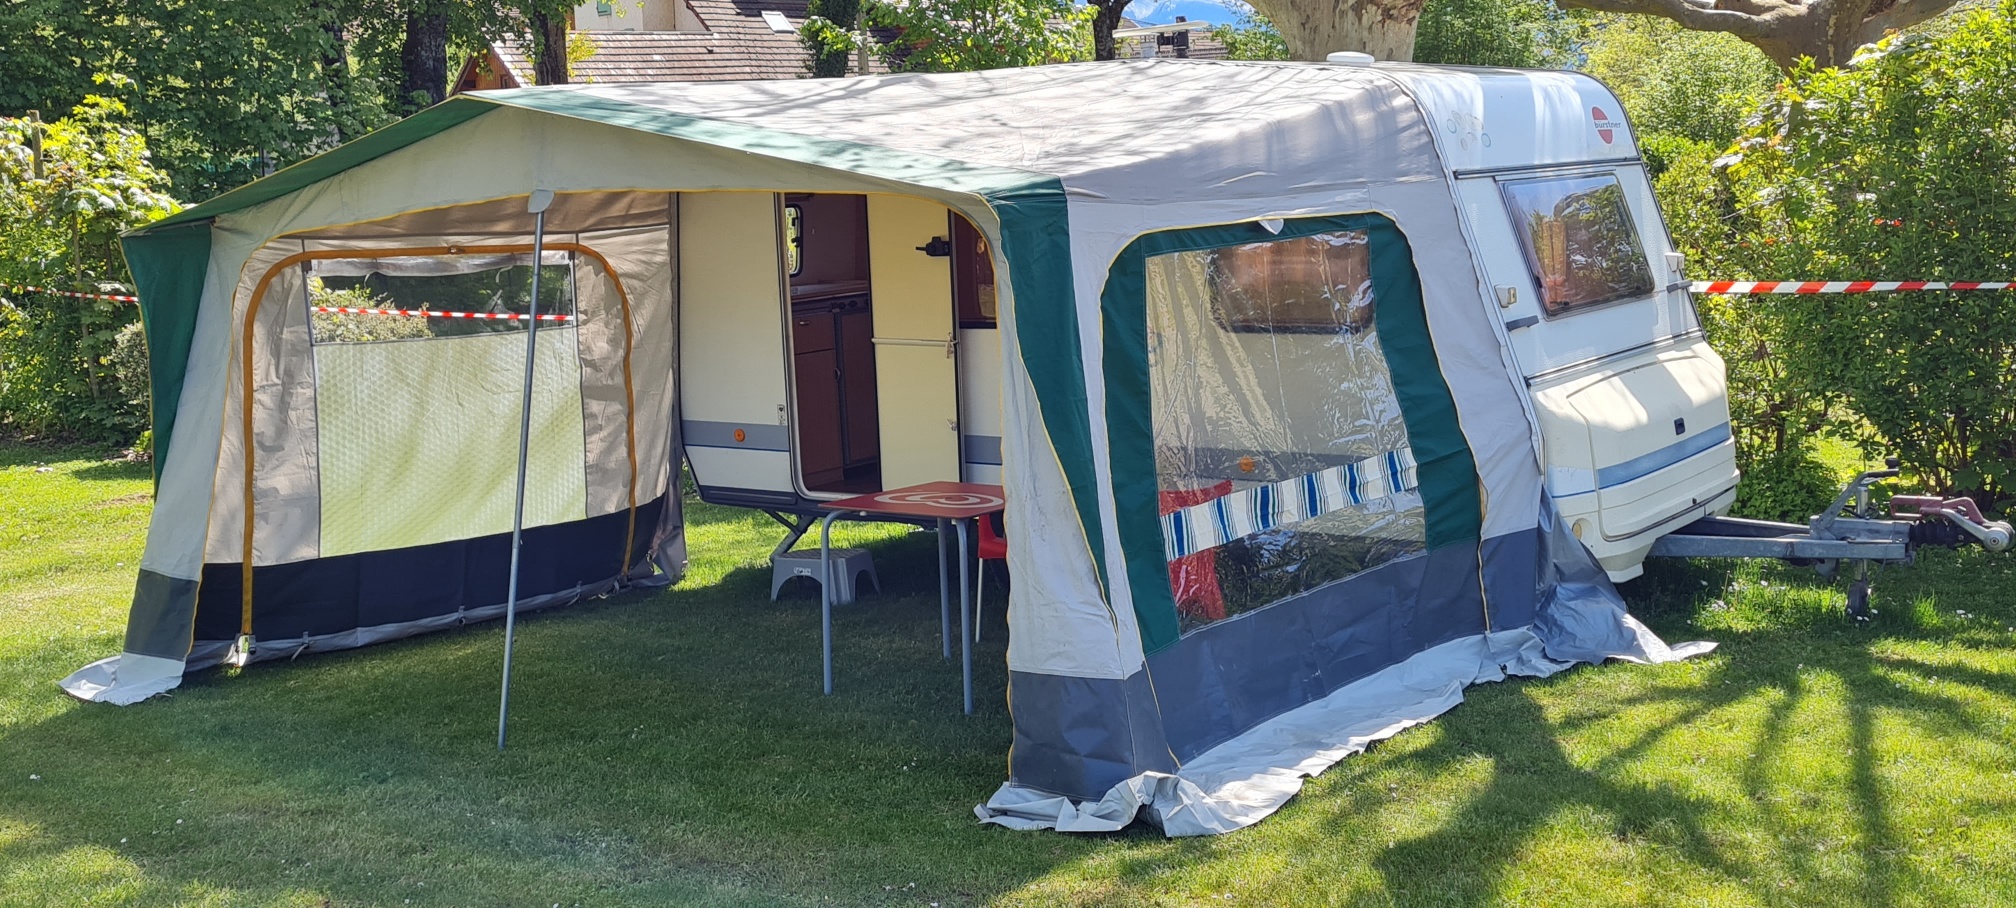 Accommodation - Location Caravane 2 Personnes - Camping Pré Rolland